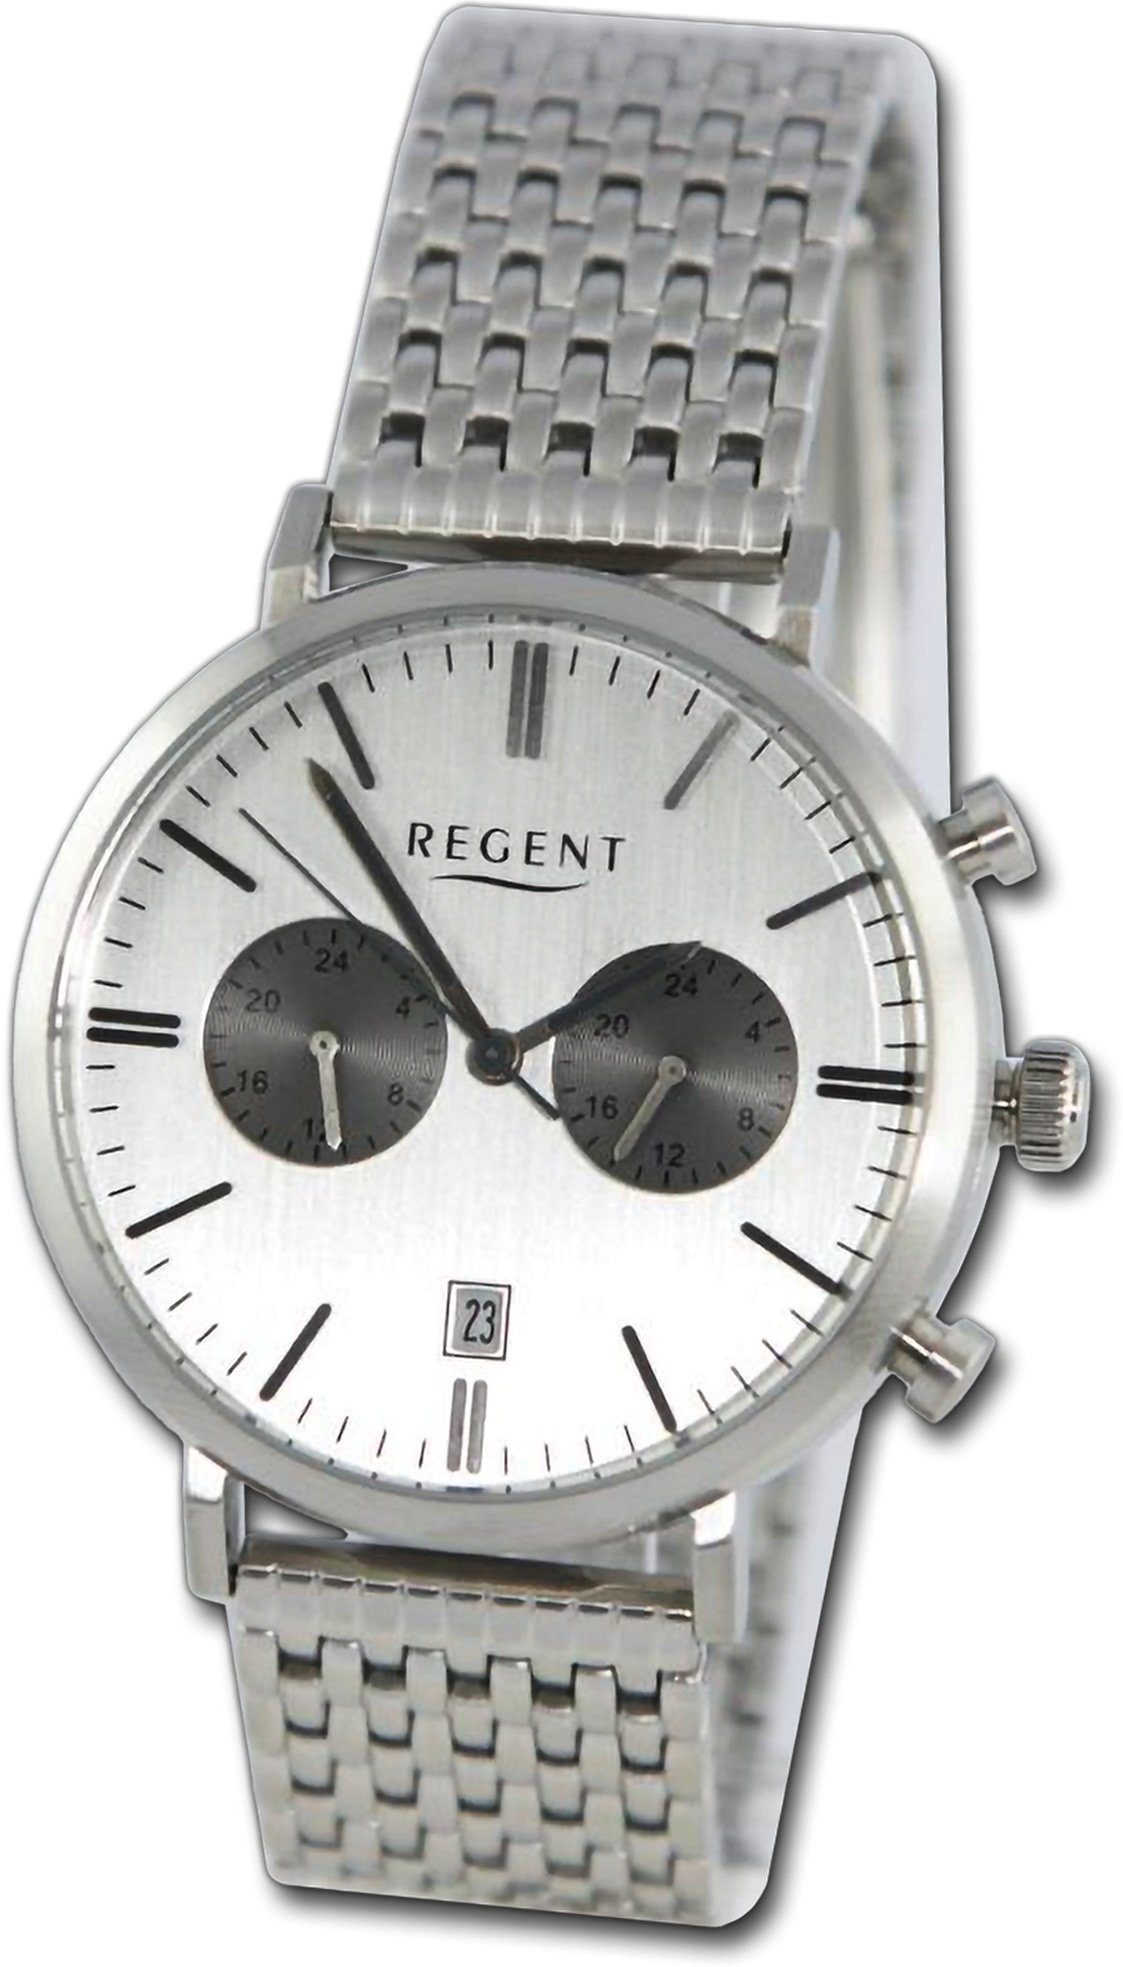 groß Analog, rundes Armbanduhr 41mm) (ca. extra Quarzuhr Herren Metallarmband Herrenuhr Gehäuse, Regent silber, Regent